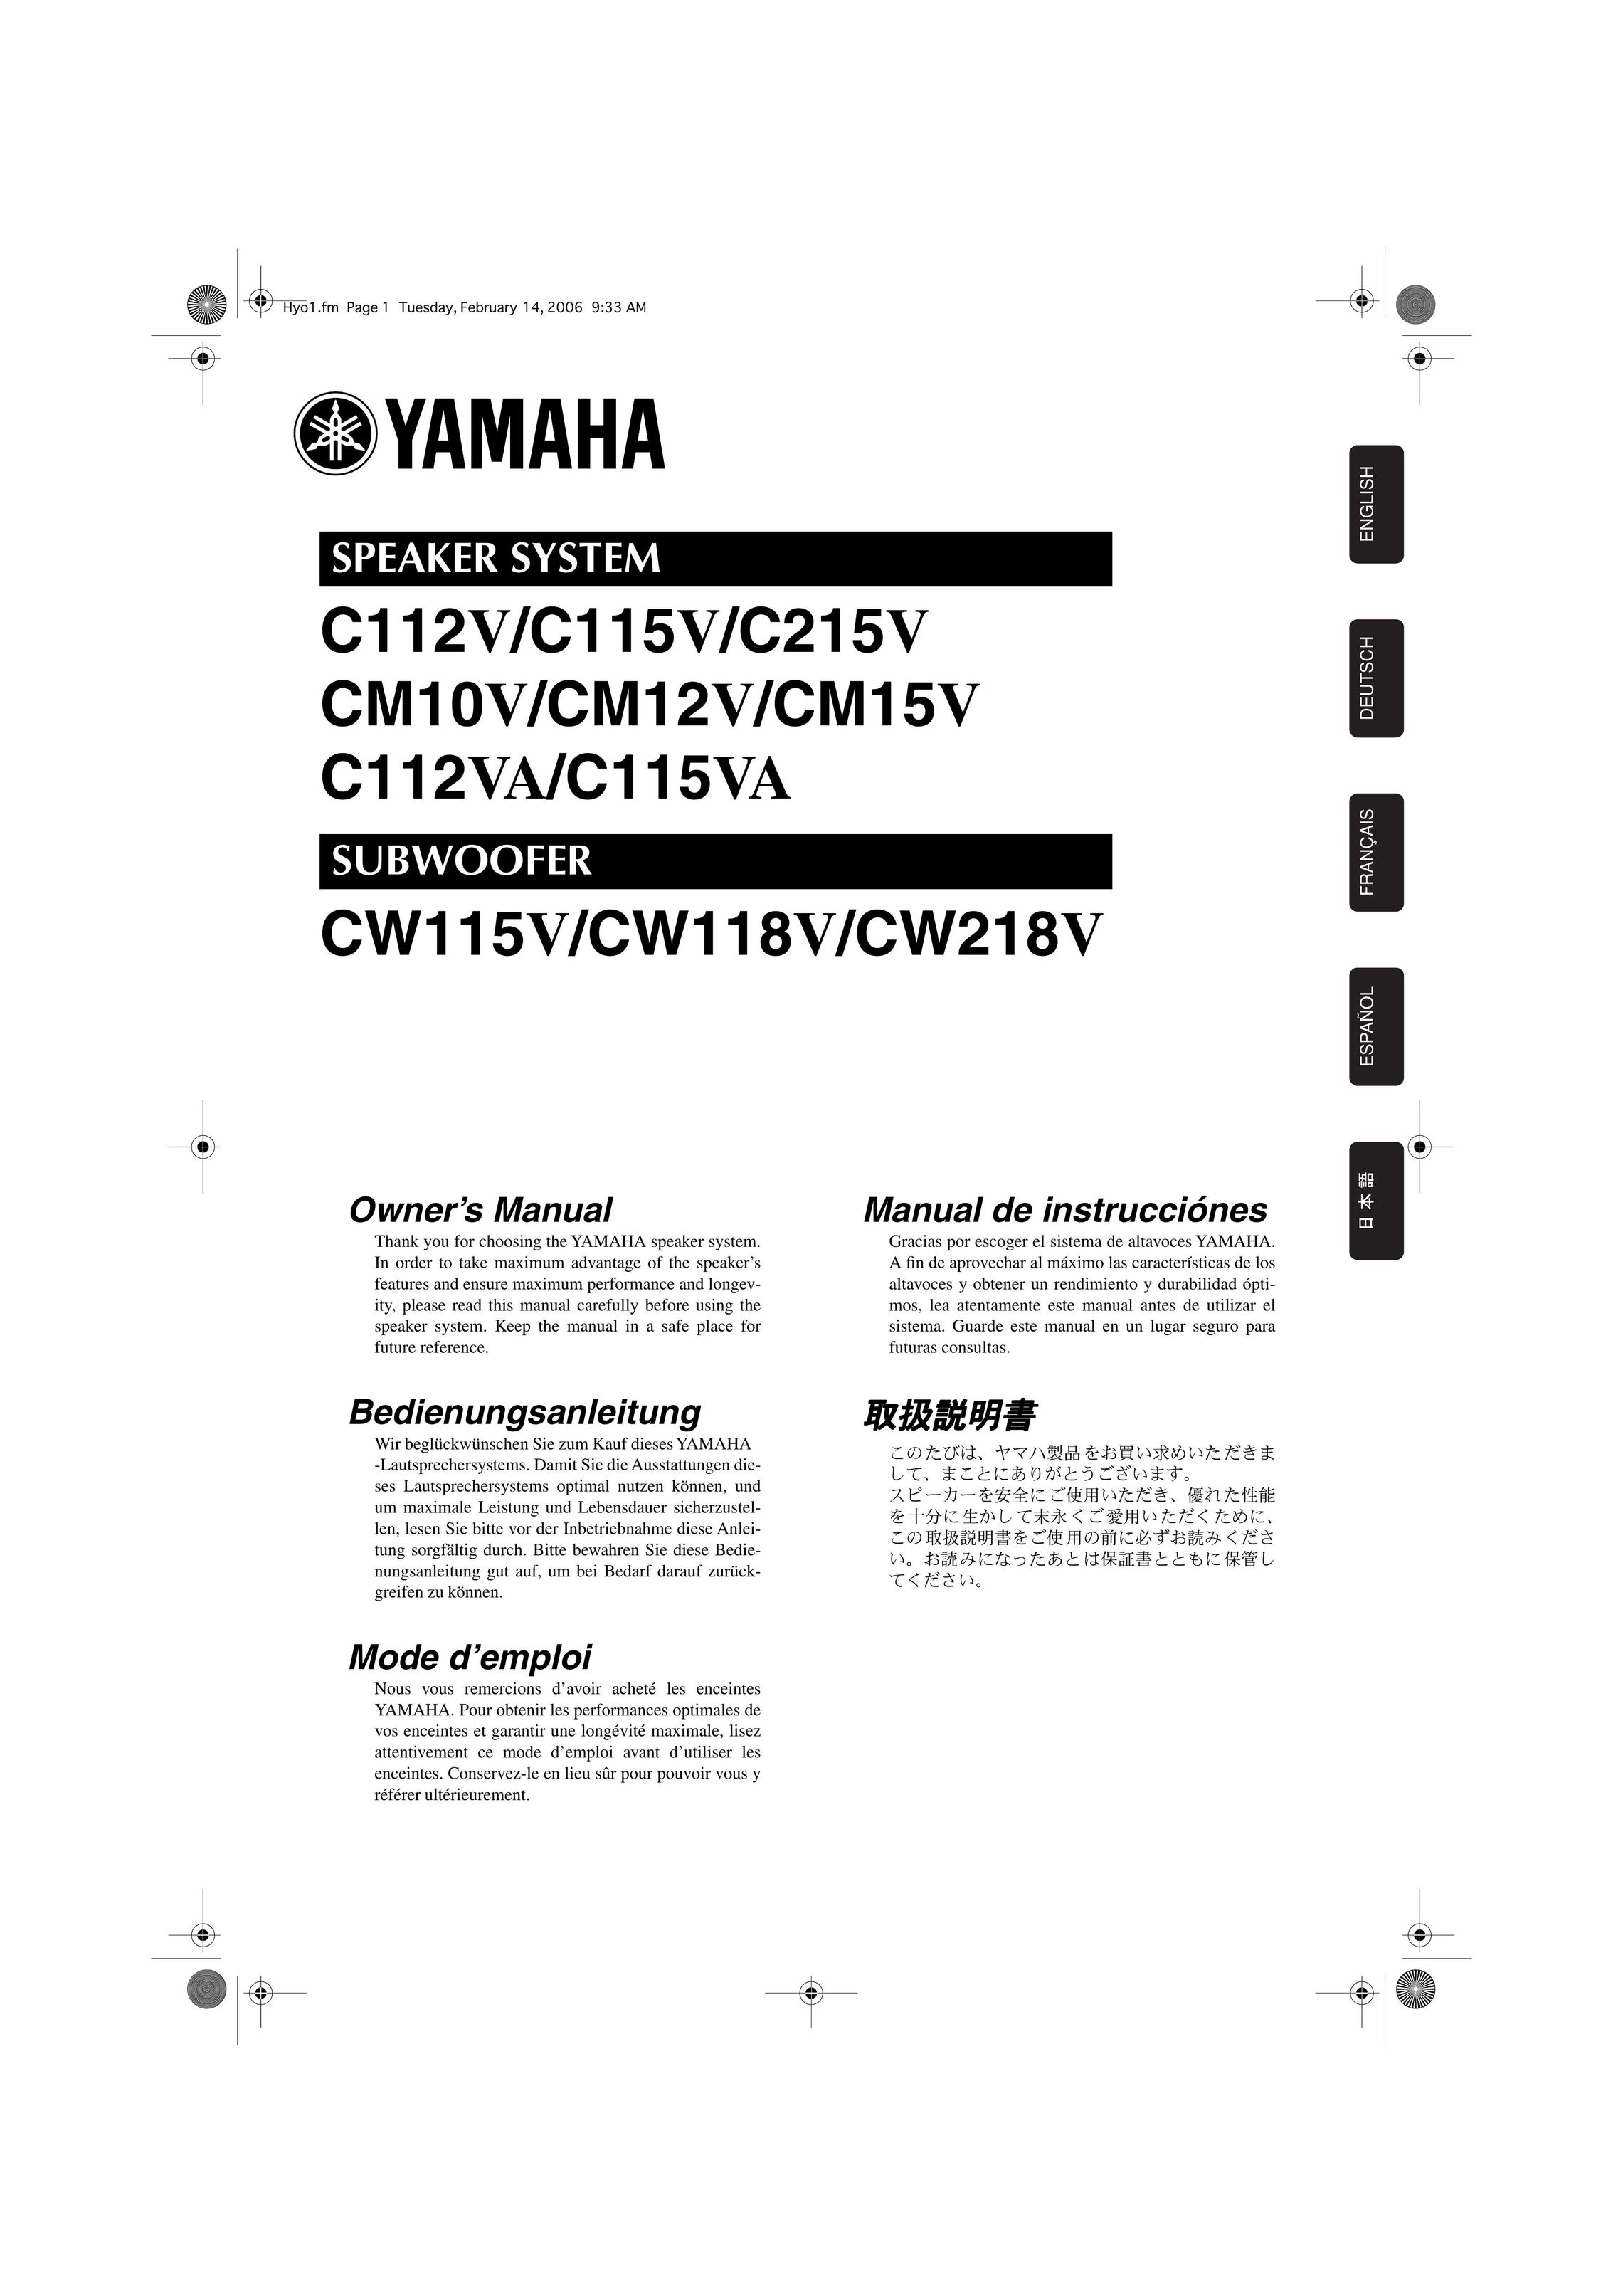 Yamaha CW218V Portable Speaker User Manual